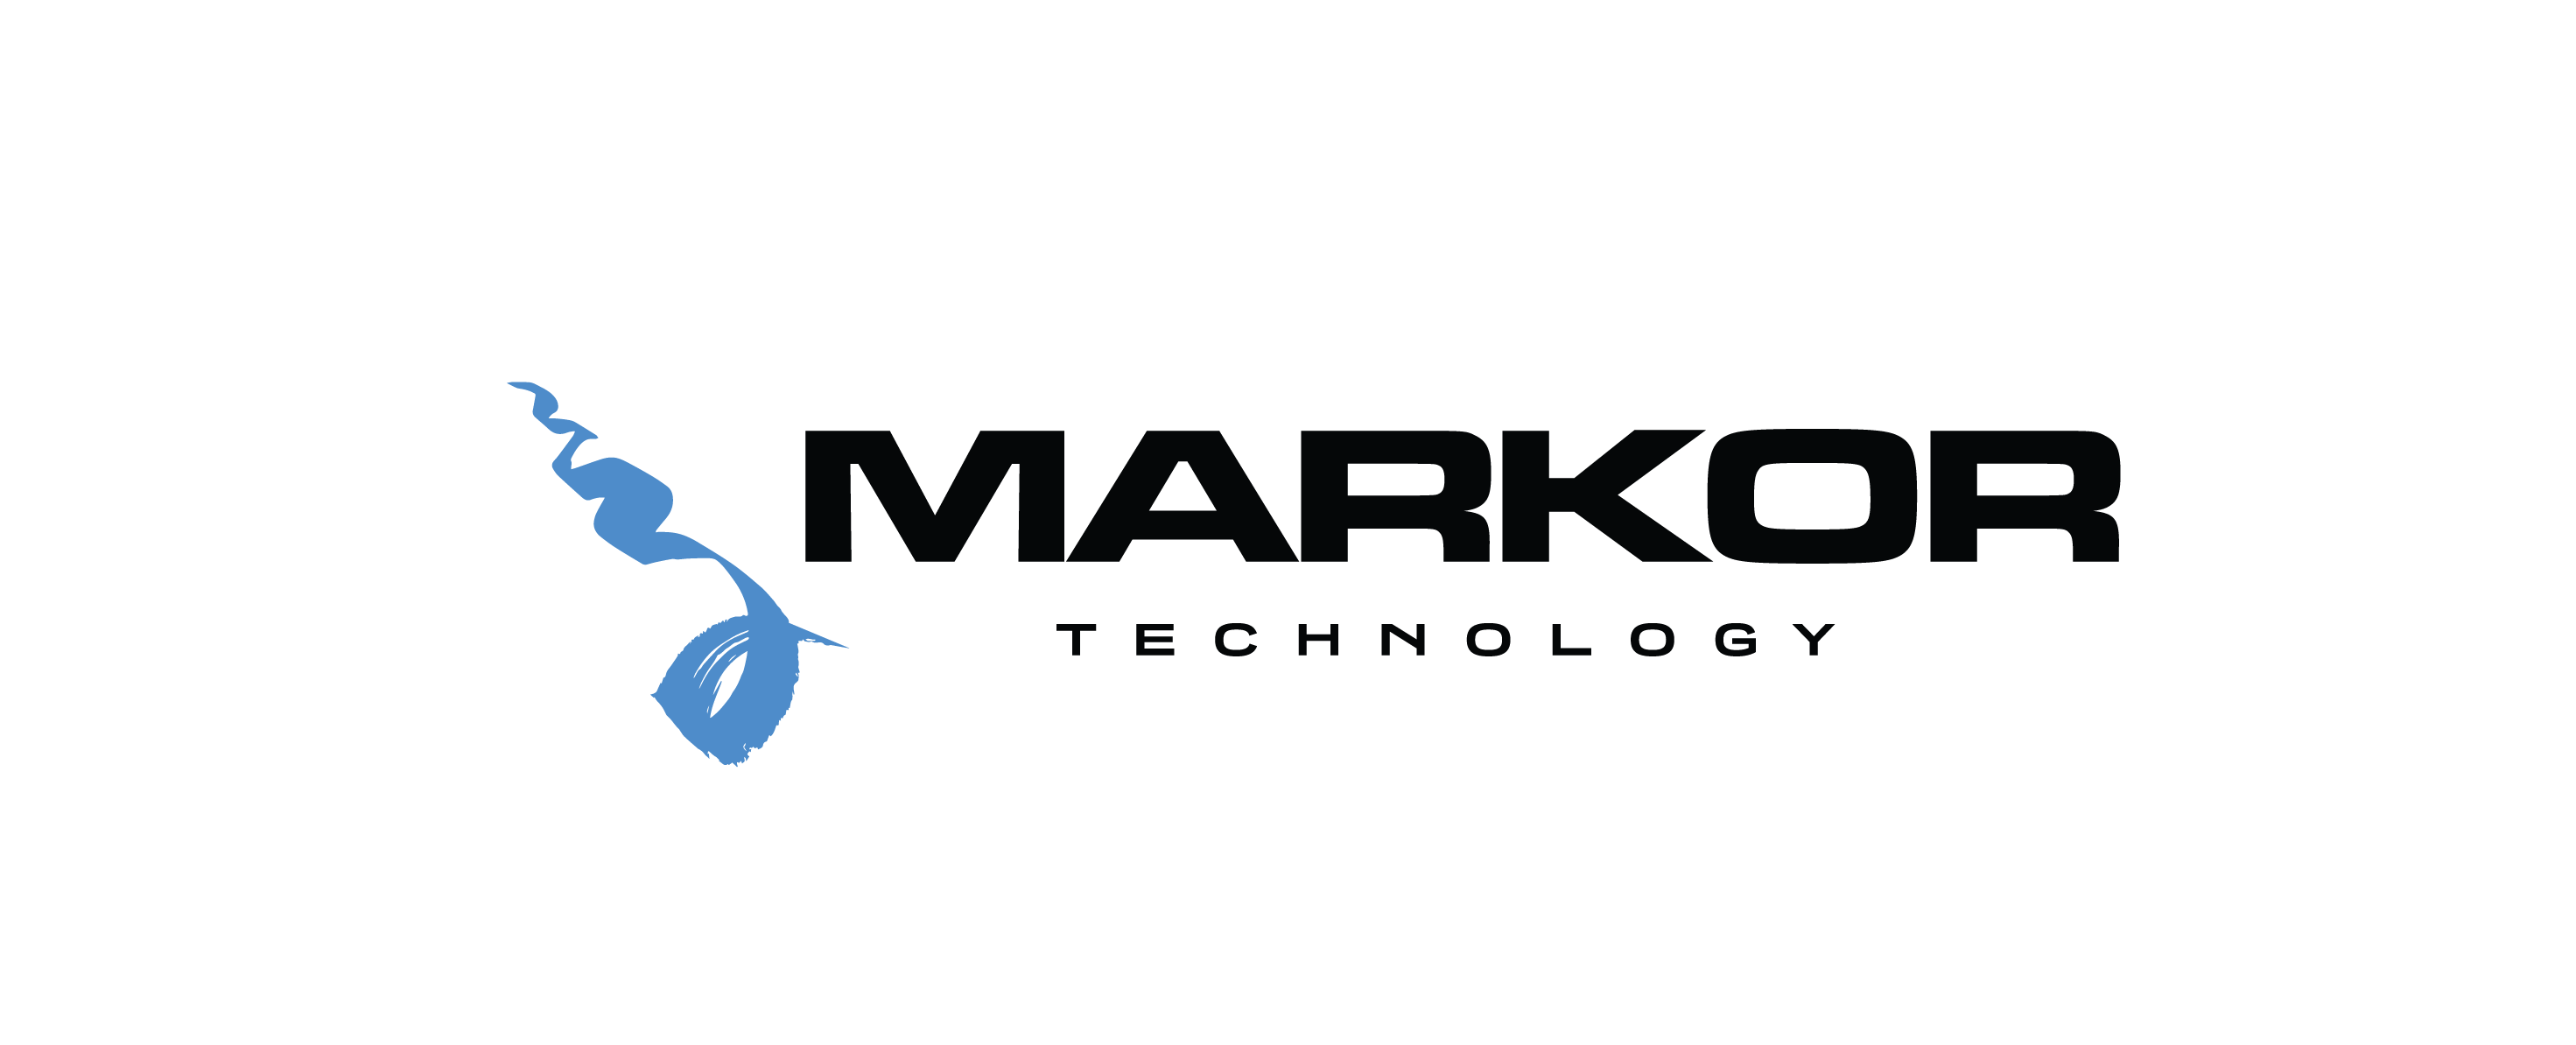 Markor Technology giochi